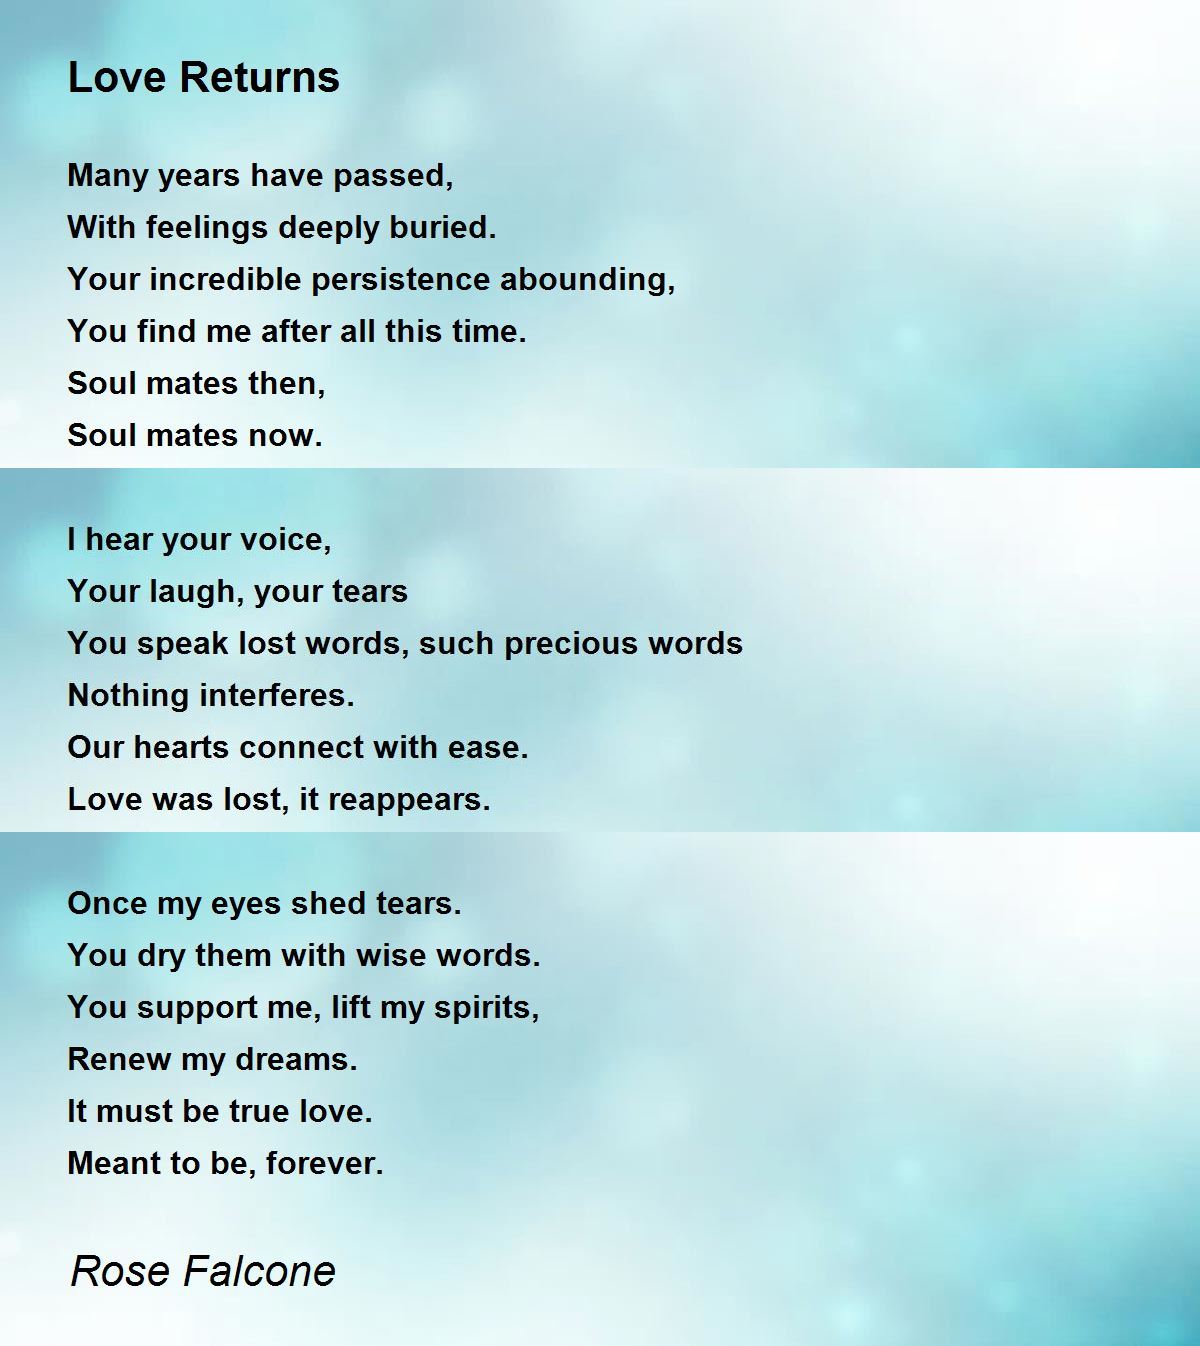 Love Returns - Love Returns Poem by Rose Falcone